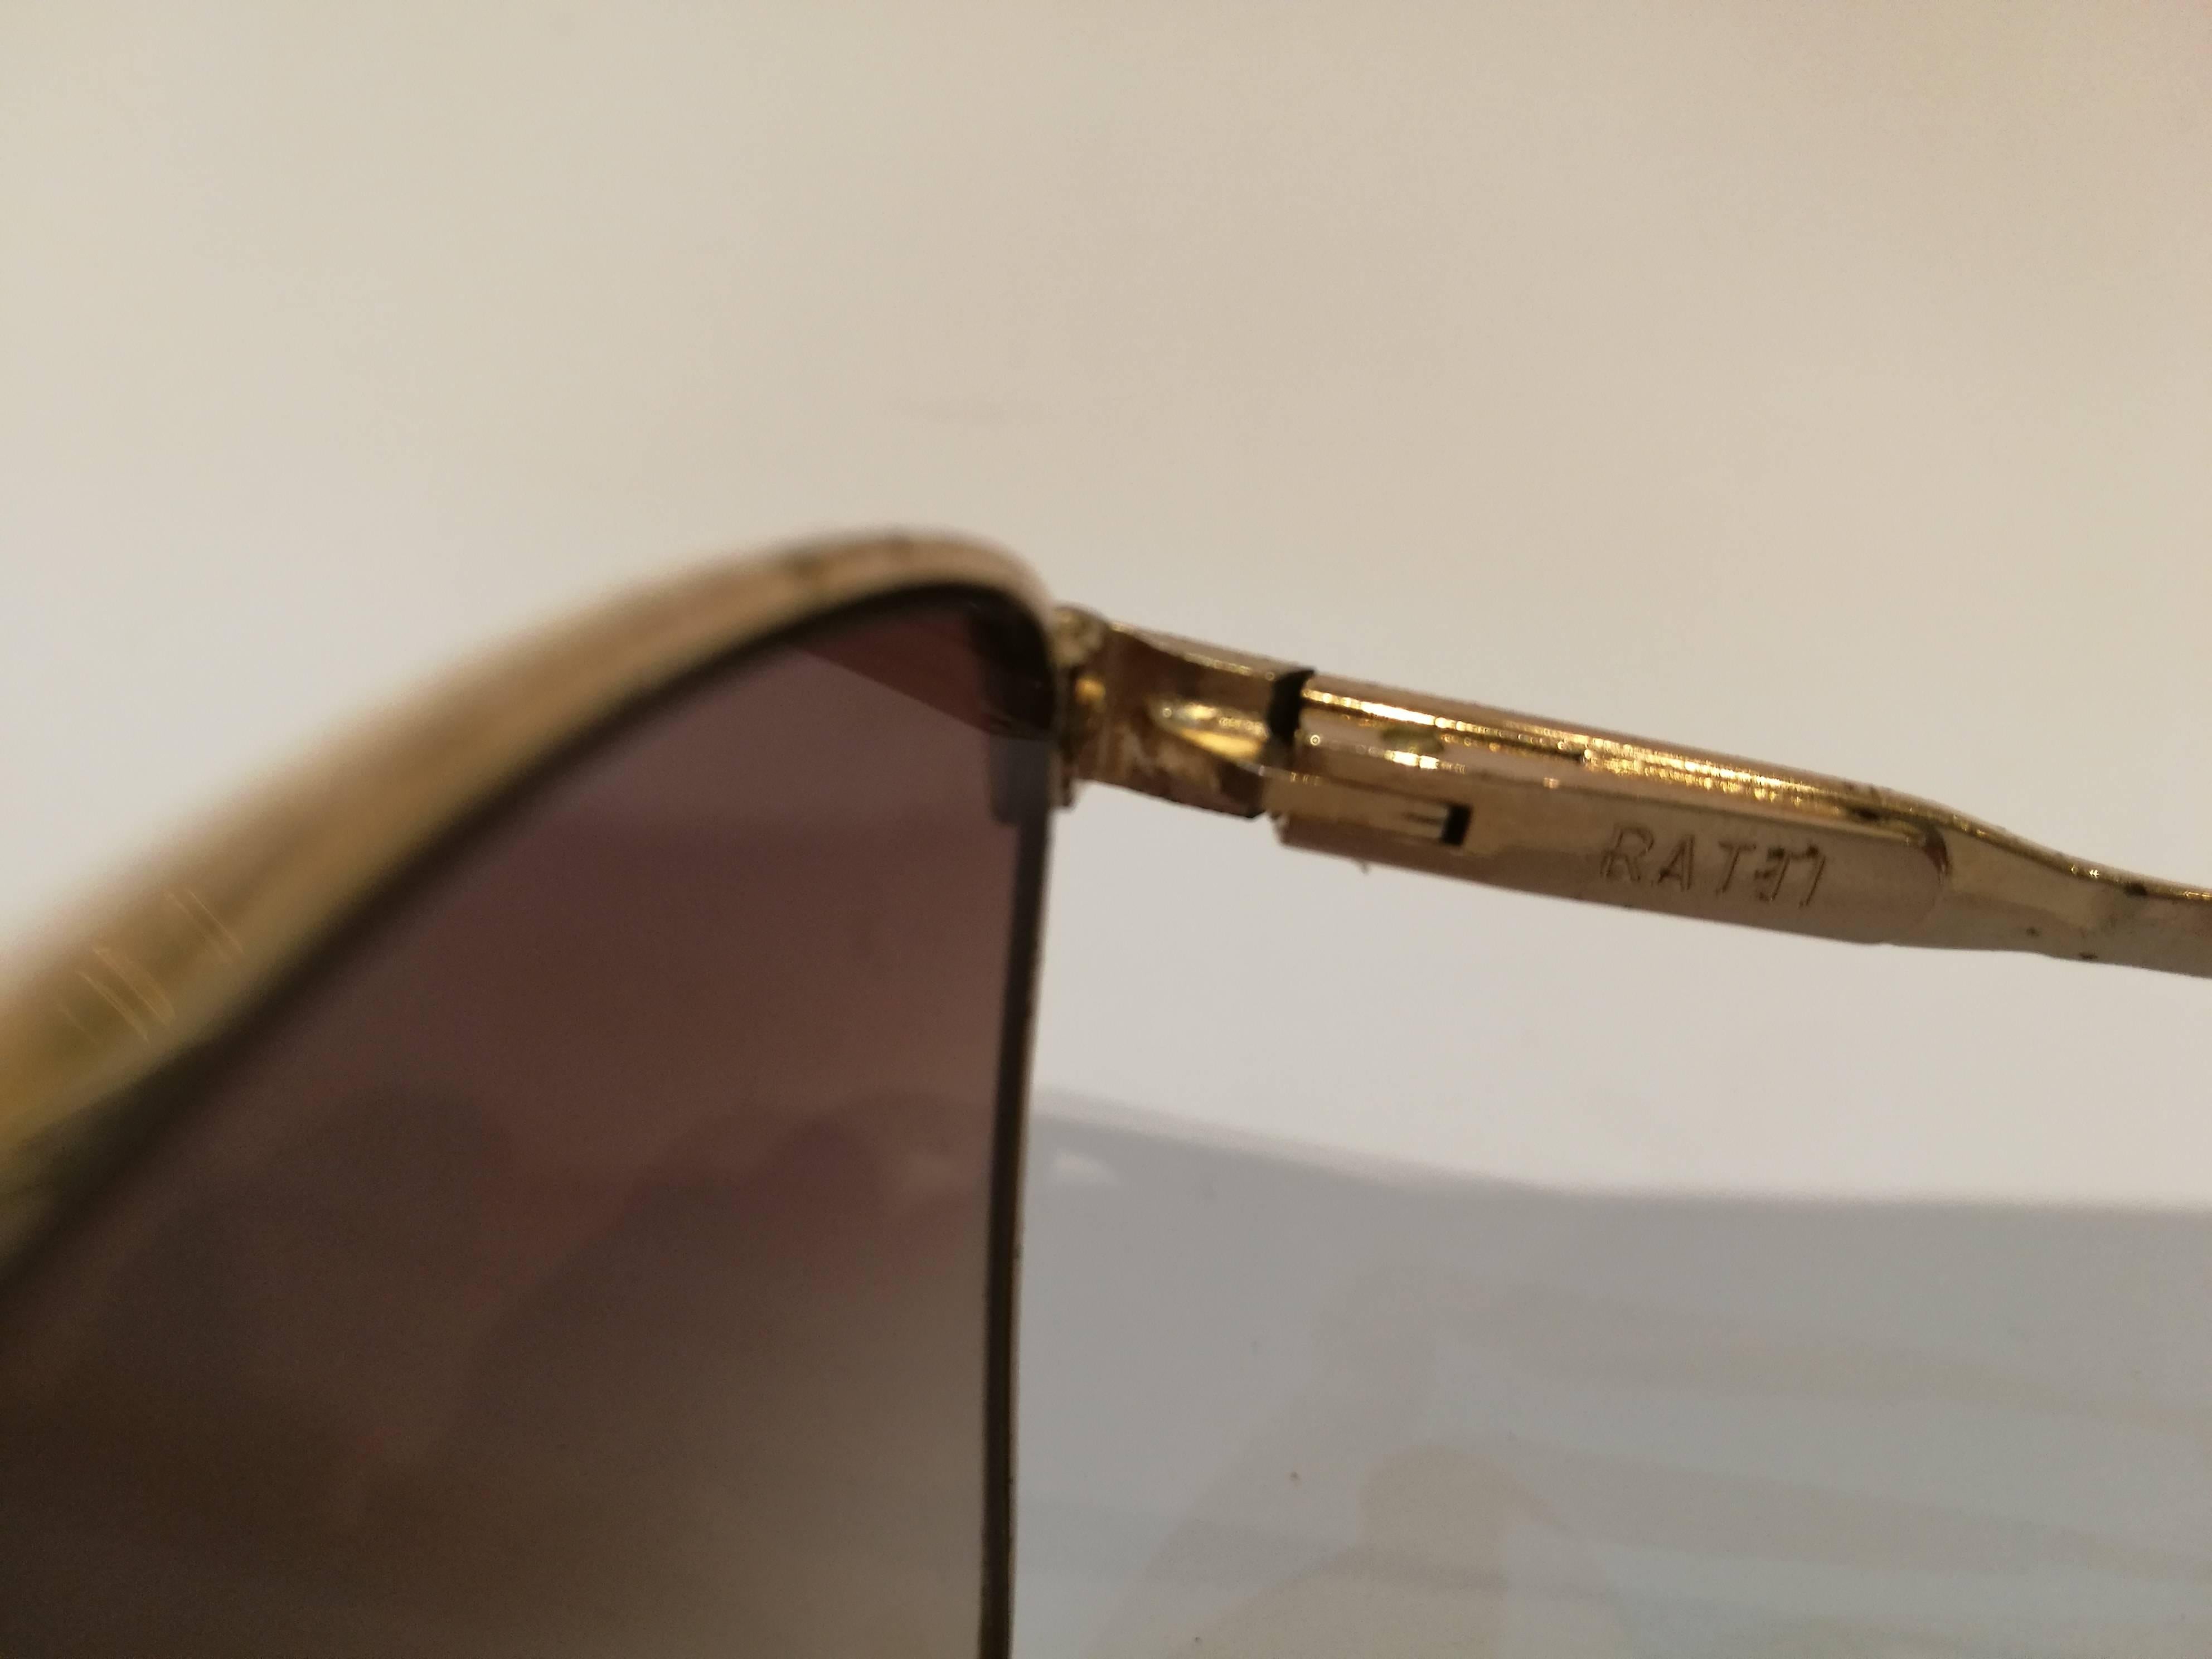 1980s Perosol Unworn Sunglasses
Gold tonehardware